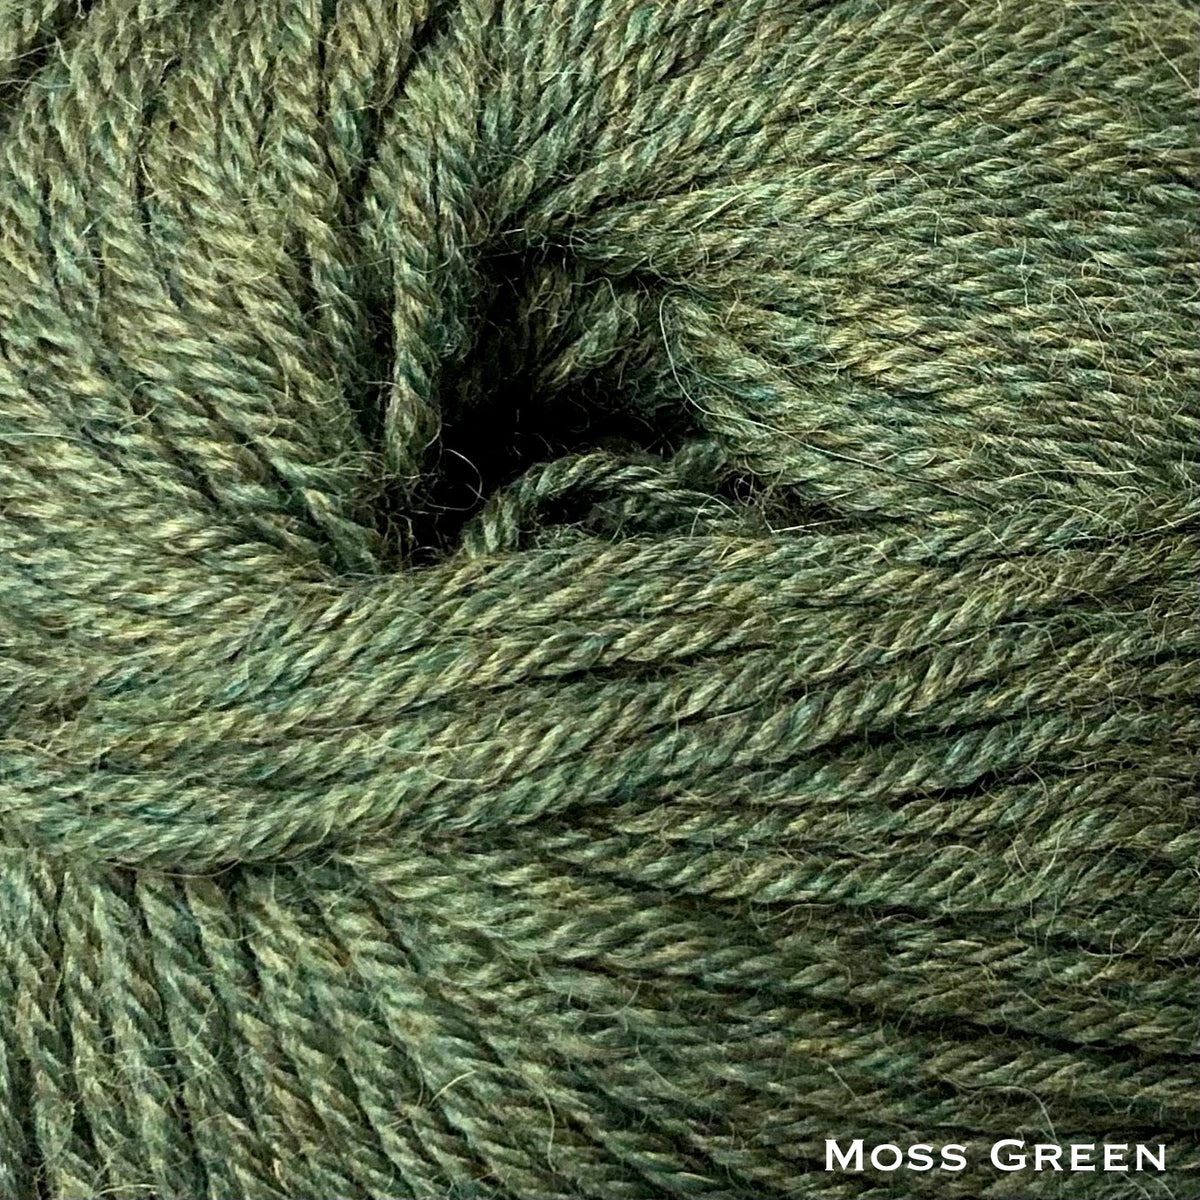 moss green sport weight alpaca wool yarn for knitting and crochet